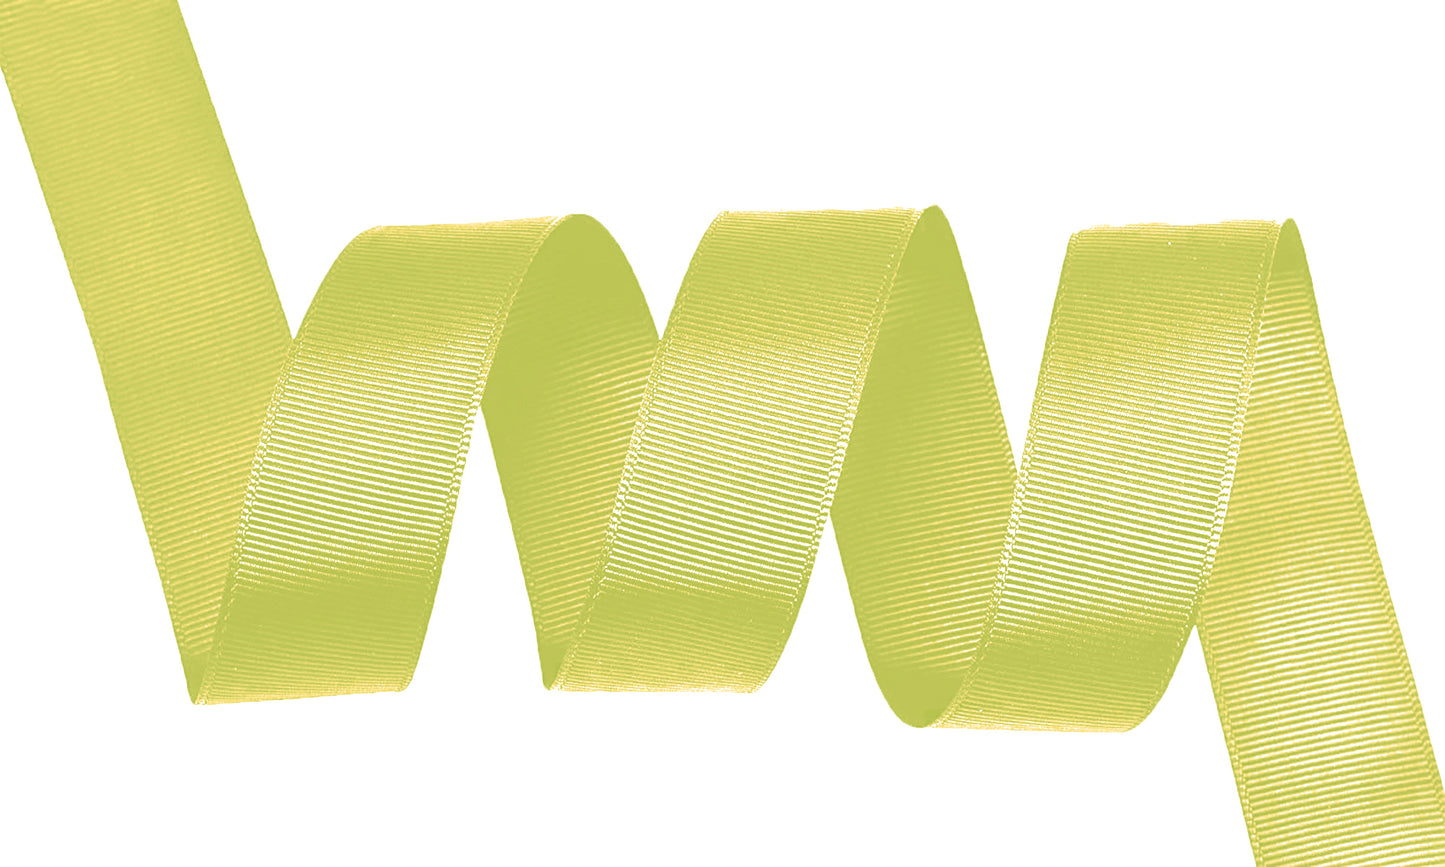 5 Yards Solid Lemon Yellow Grosgrain Ribbon Yardage DIY Crafts Bows USA